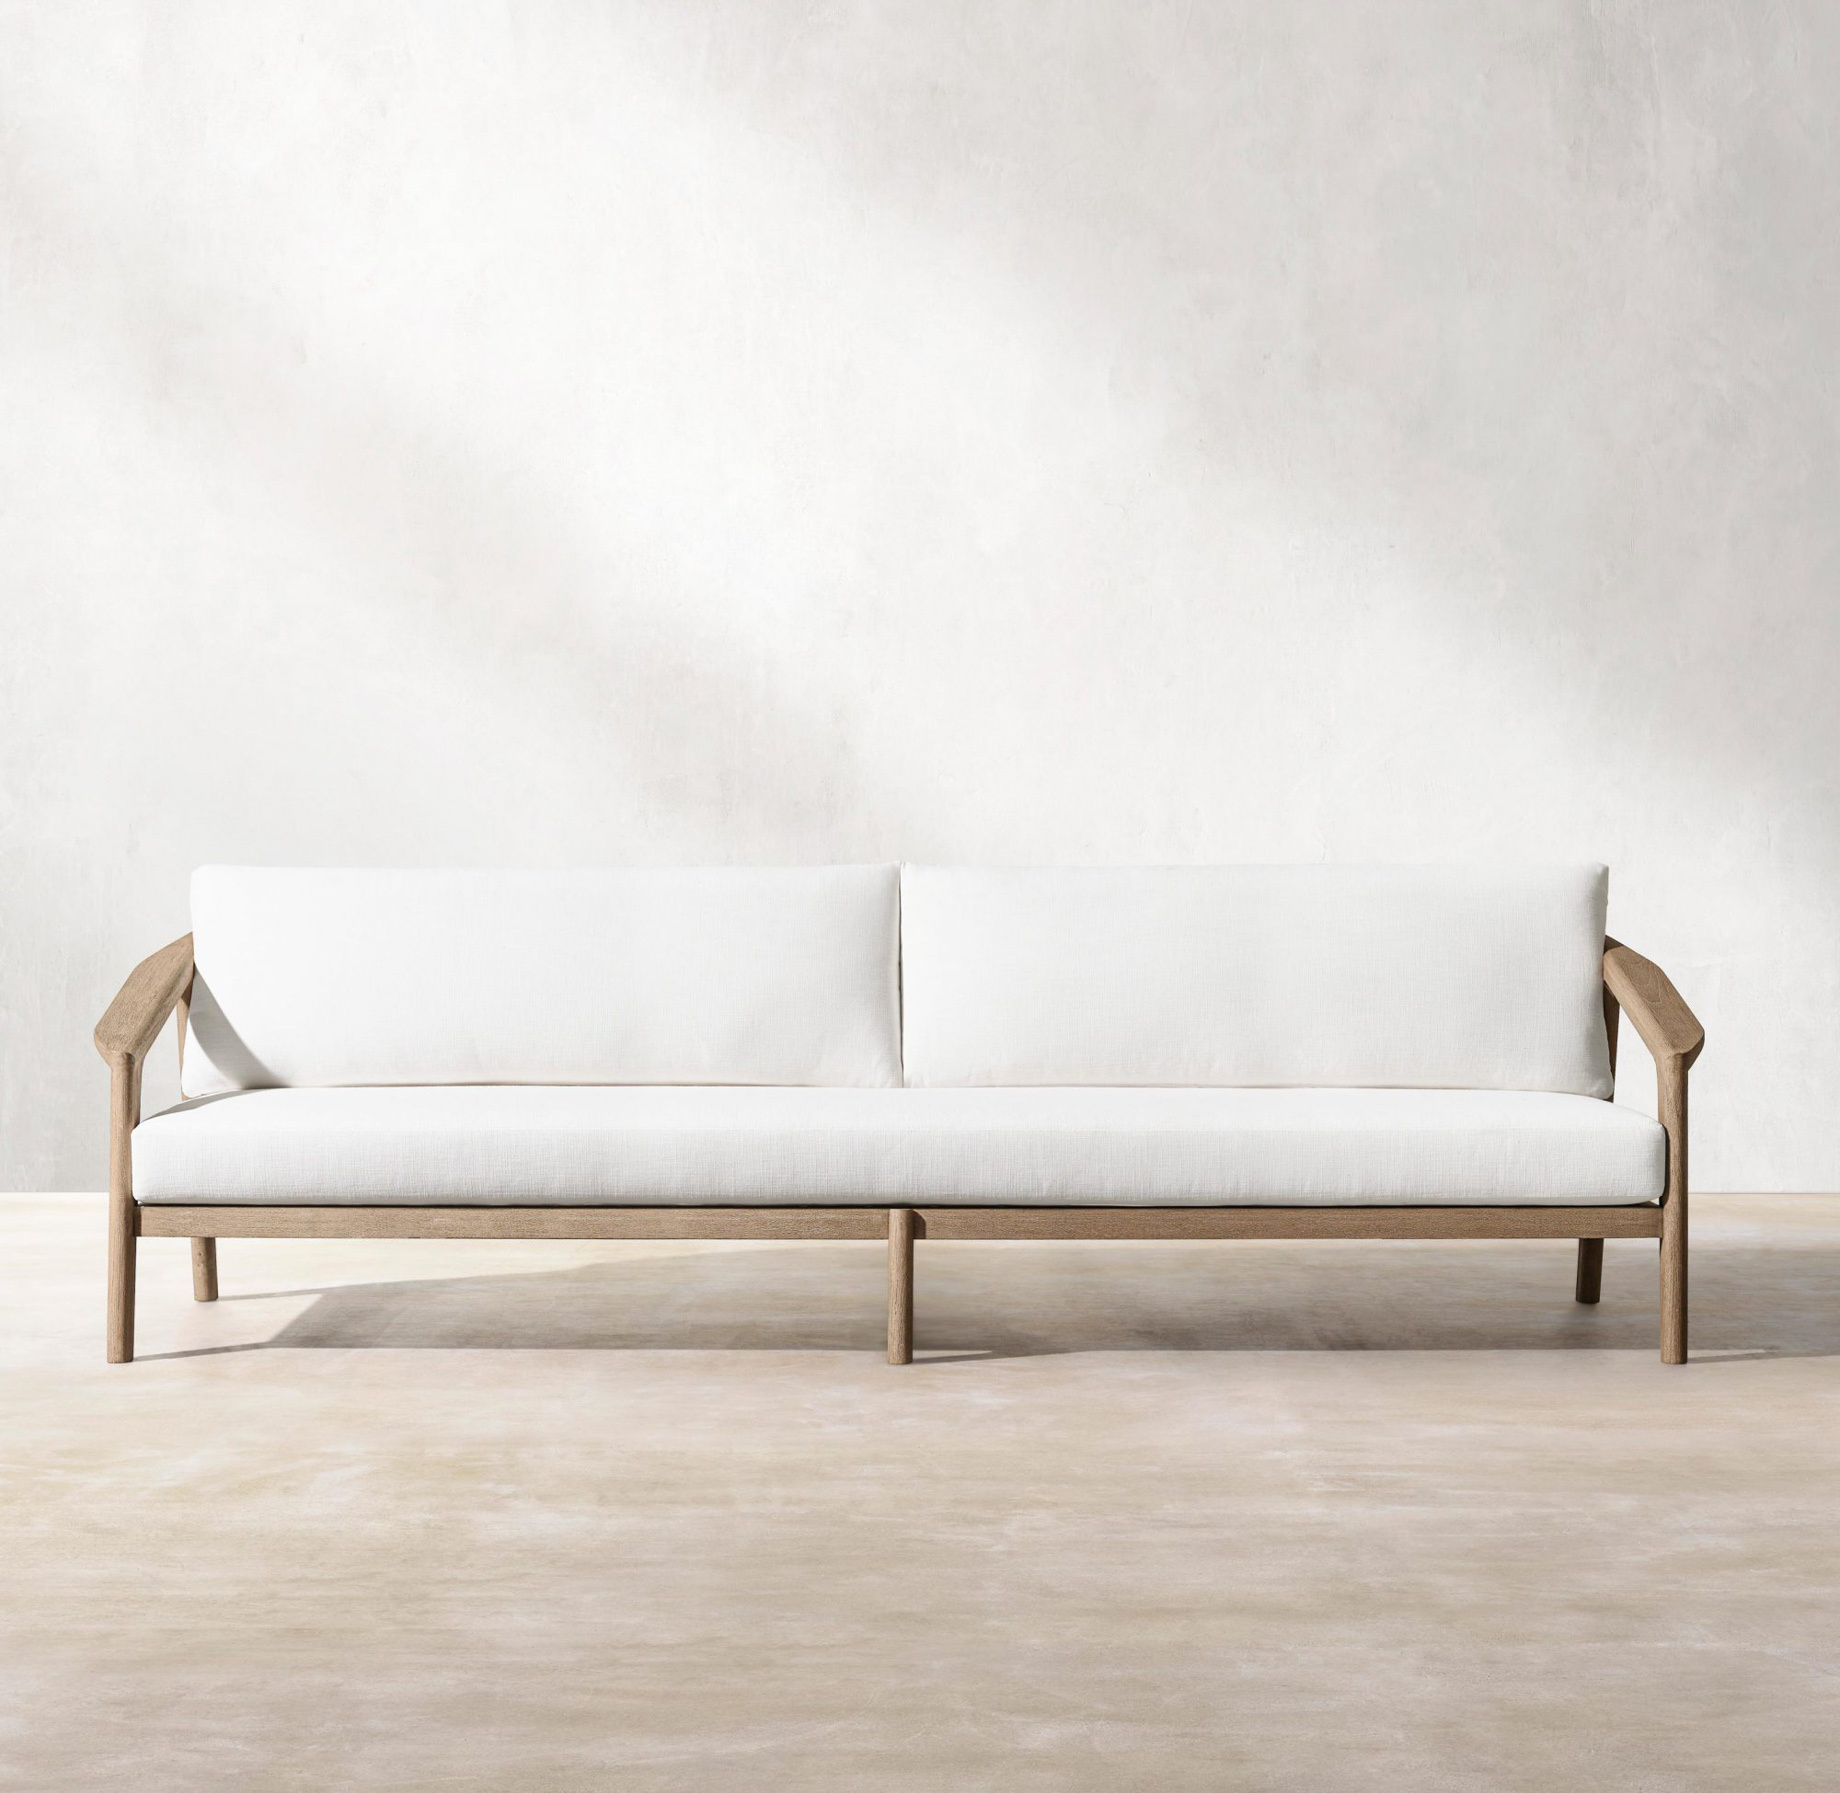 Malta Teak Collection Outdoor Furniture Design for RH – Ramon Esteve – Malta Teak 108 Large Sofa